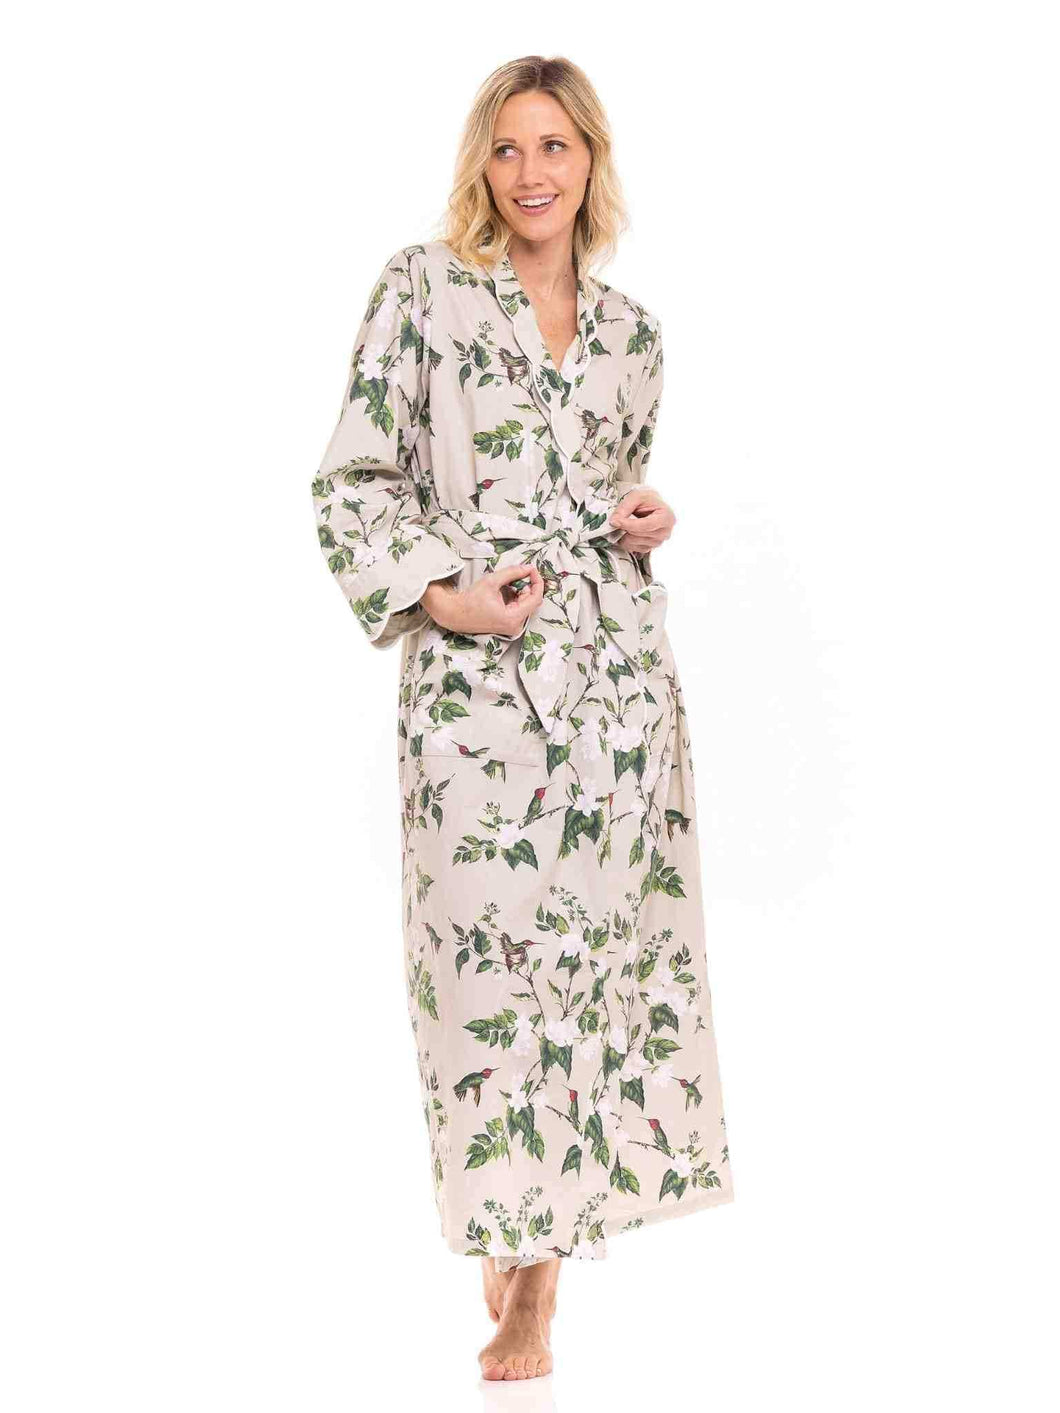 100% Cotton Robes for Women - Heidi Carey